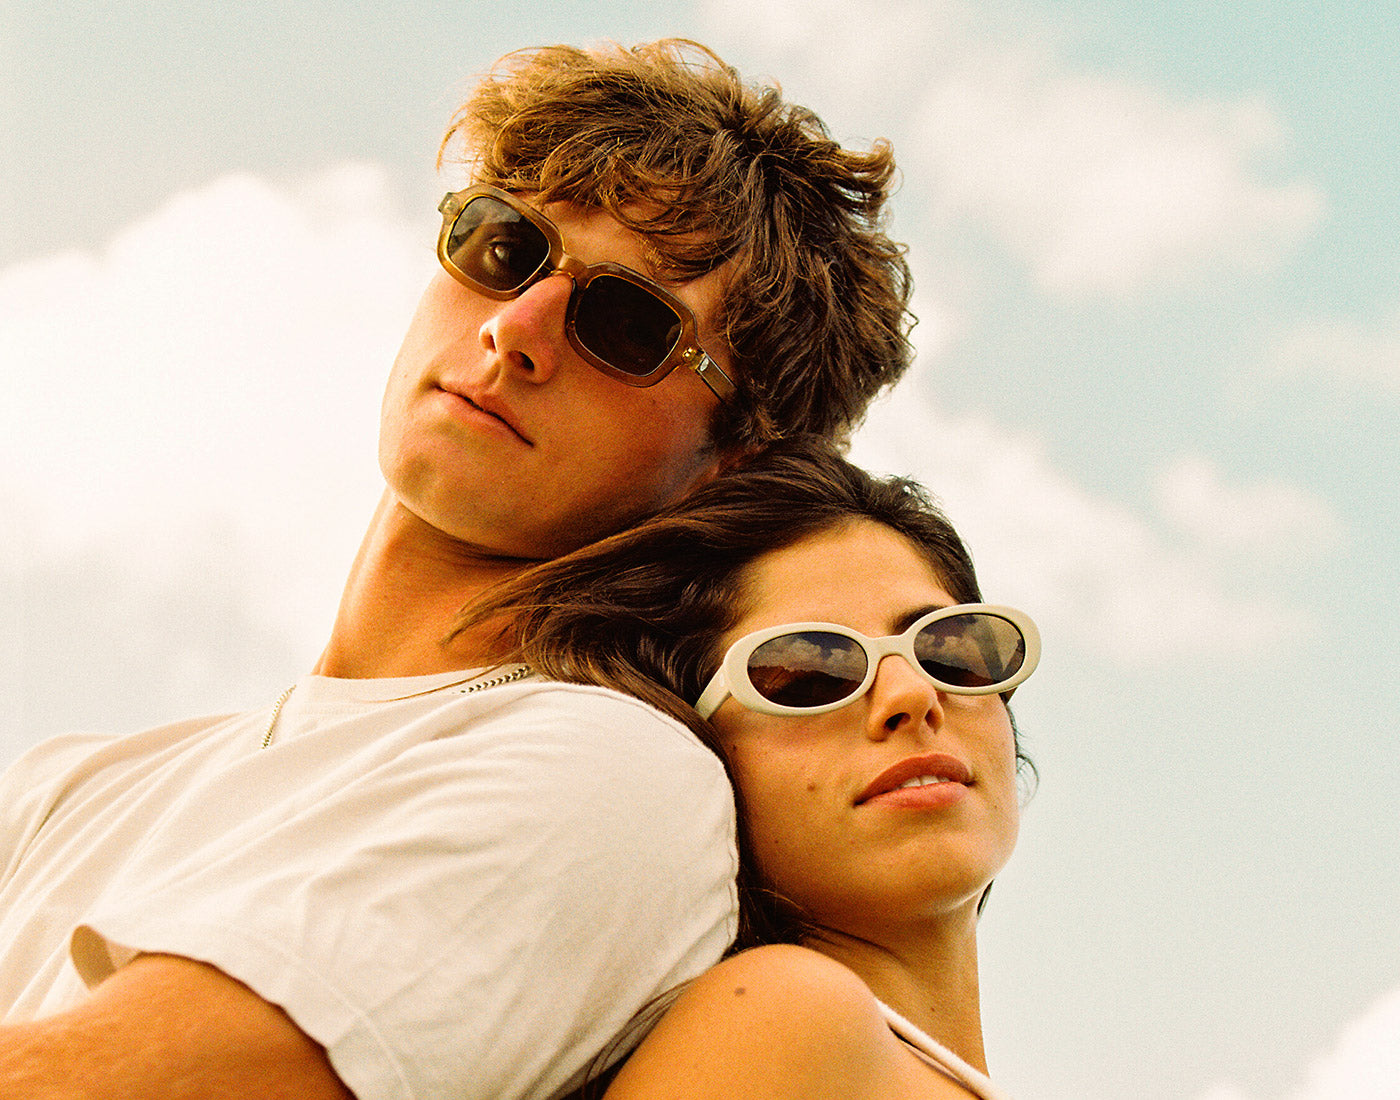 guy and girl wearing sunski bianca sunglasses